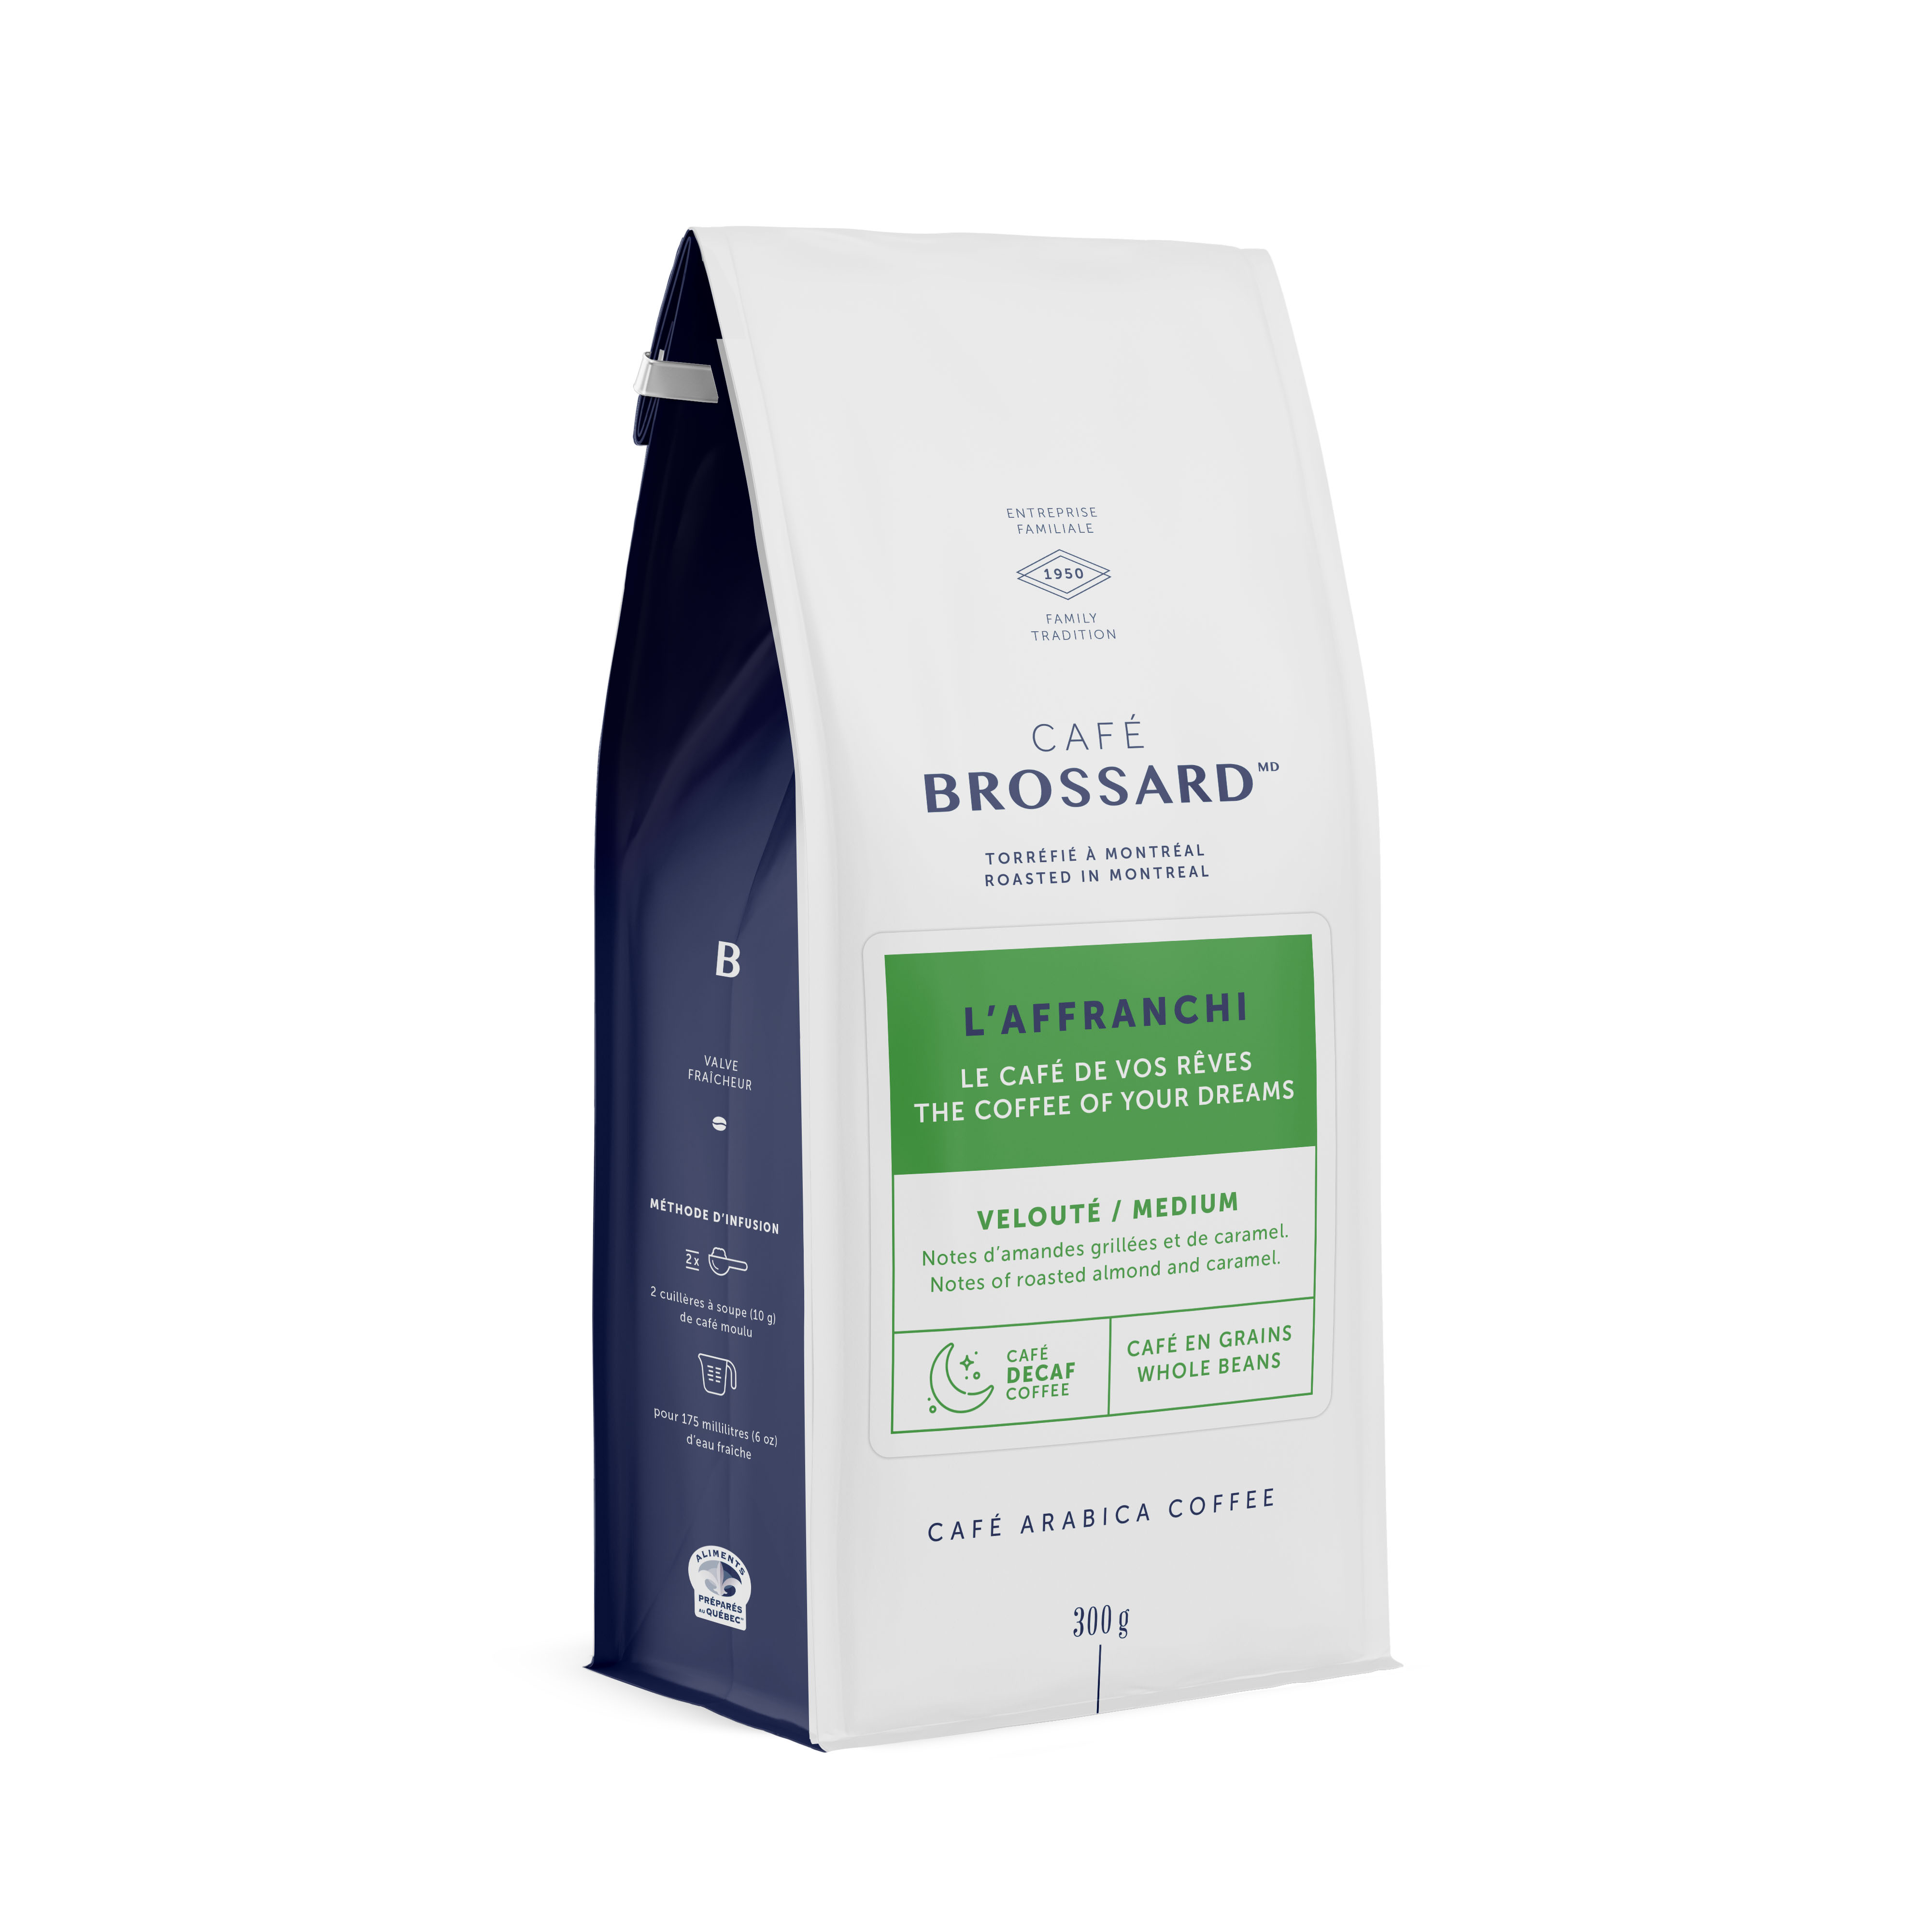 Download Exclusive Mockups for Branding and Packaging Design - Café Brossard